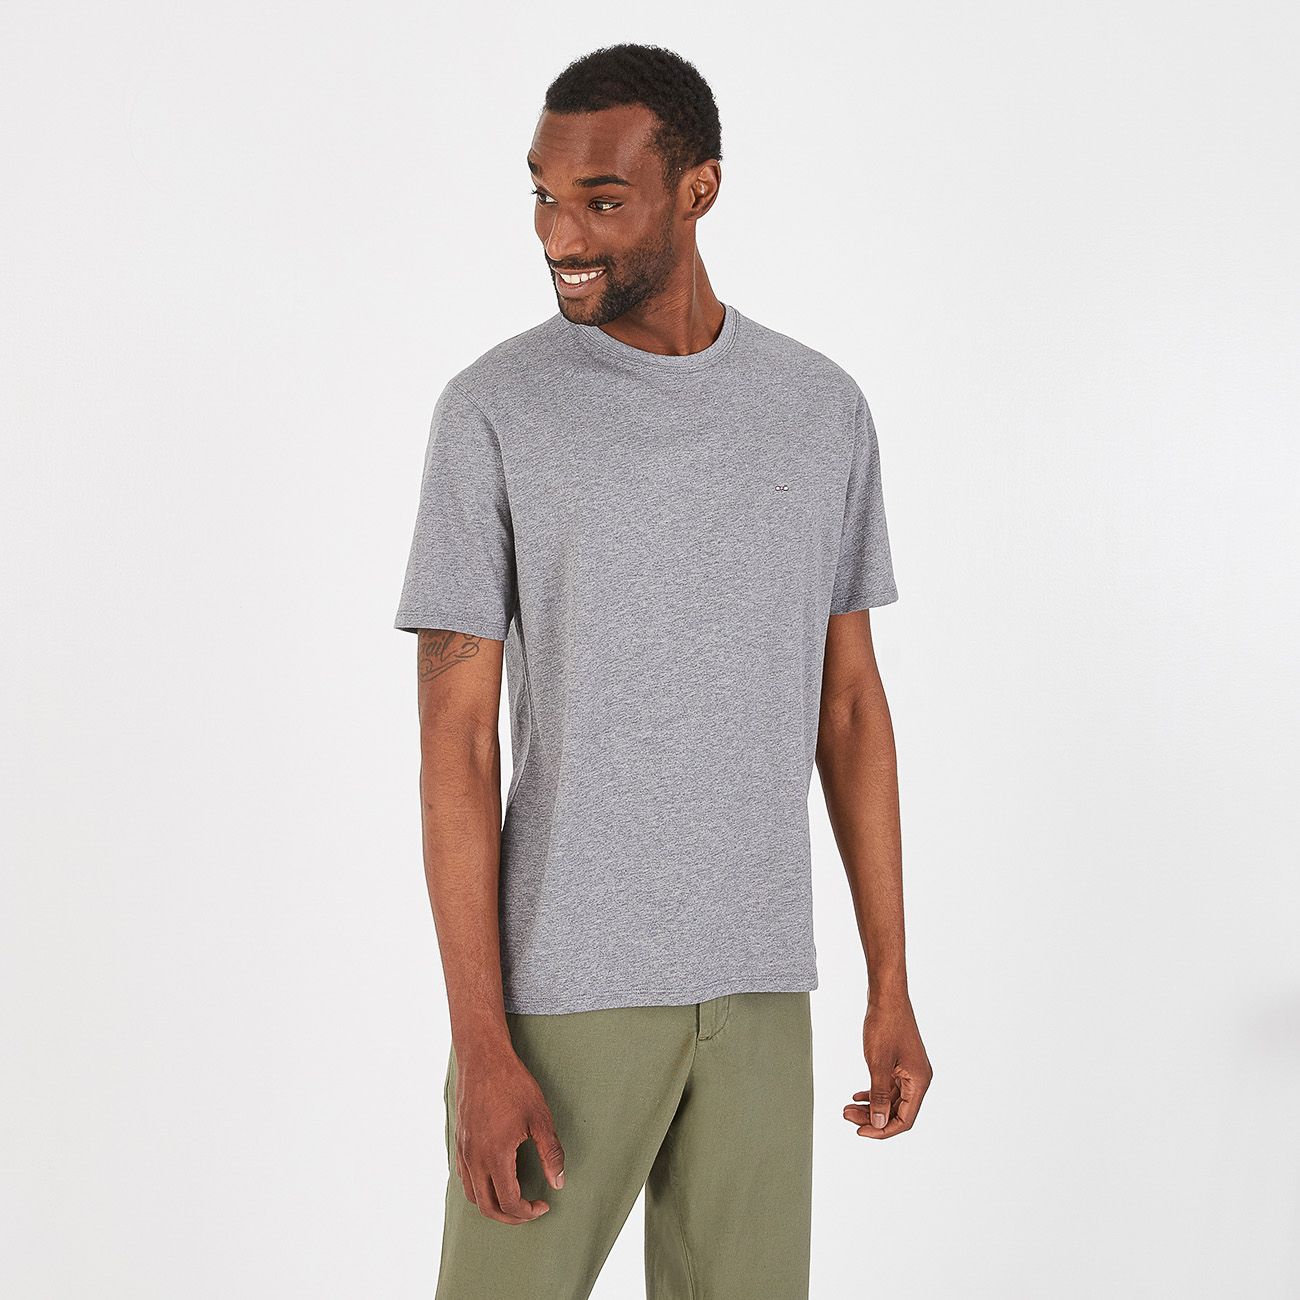 Eden Park Tee Shirt in regular classic fit.    Chosen in a Grey colour